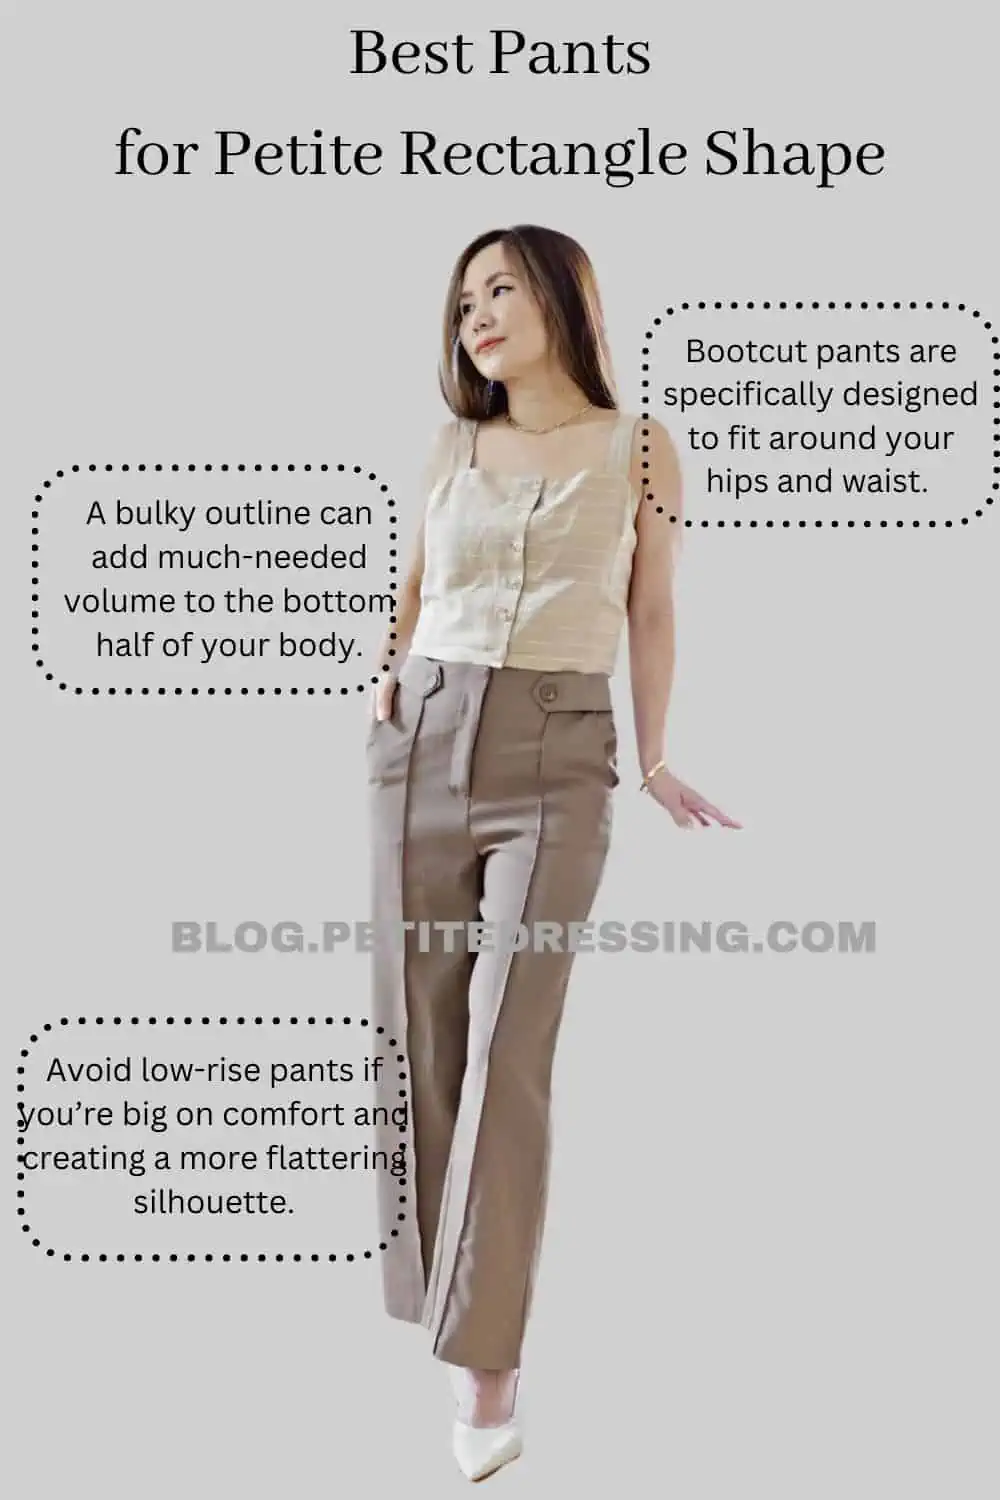 The Pants Guide for Petite Rectangle Shape - Petite Dressing